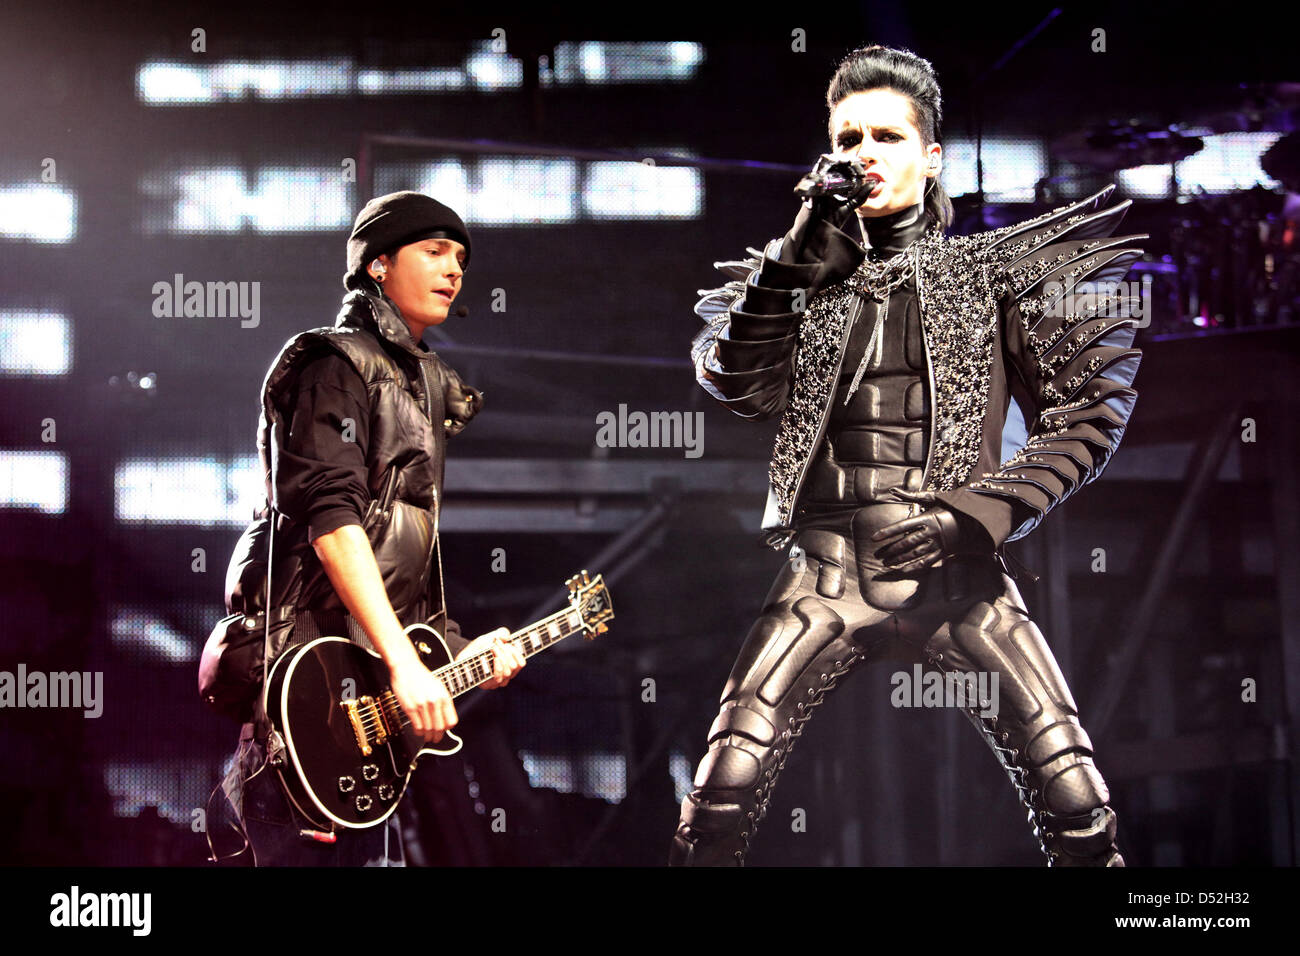 German rock band 'Tokio Hotel' with singer Bill Kaulitz performs a show in  Hamburg, Germany, 28 February 2010. Photo: Bodo Marks Stock Photo - Alamy